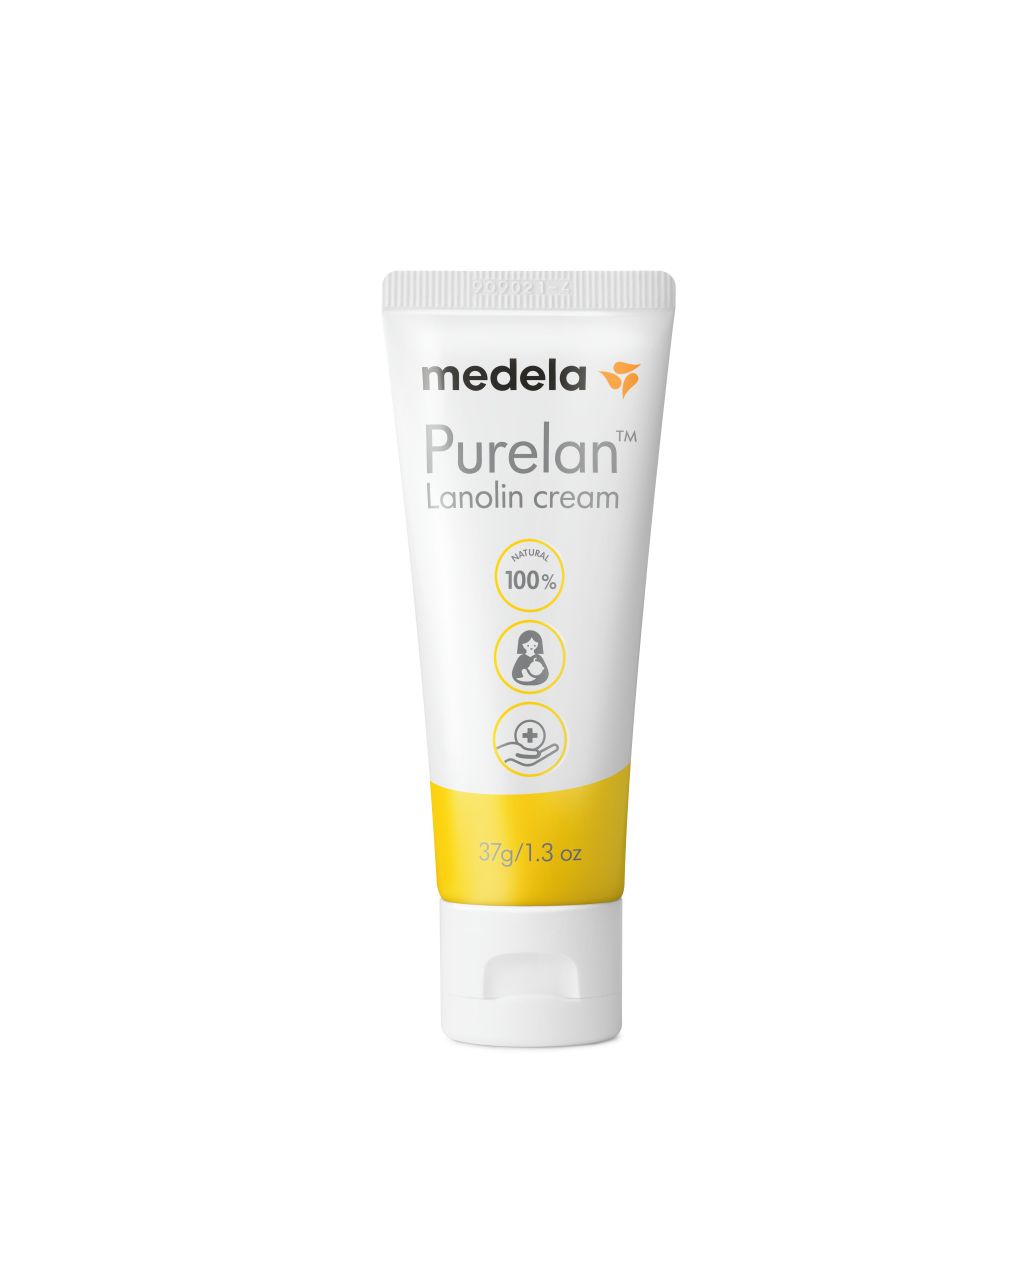 Purelan™ – crema alla lanolina 37g - medela - Medela